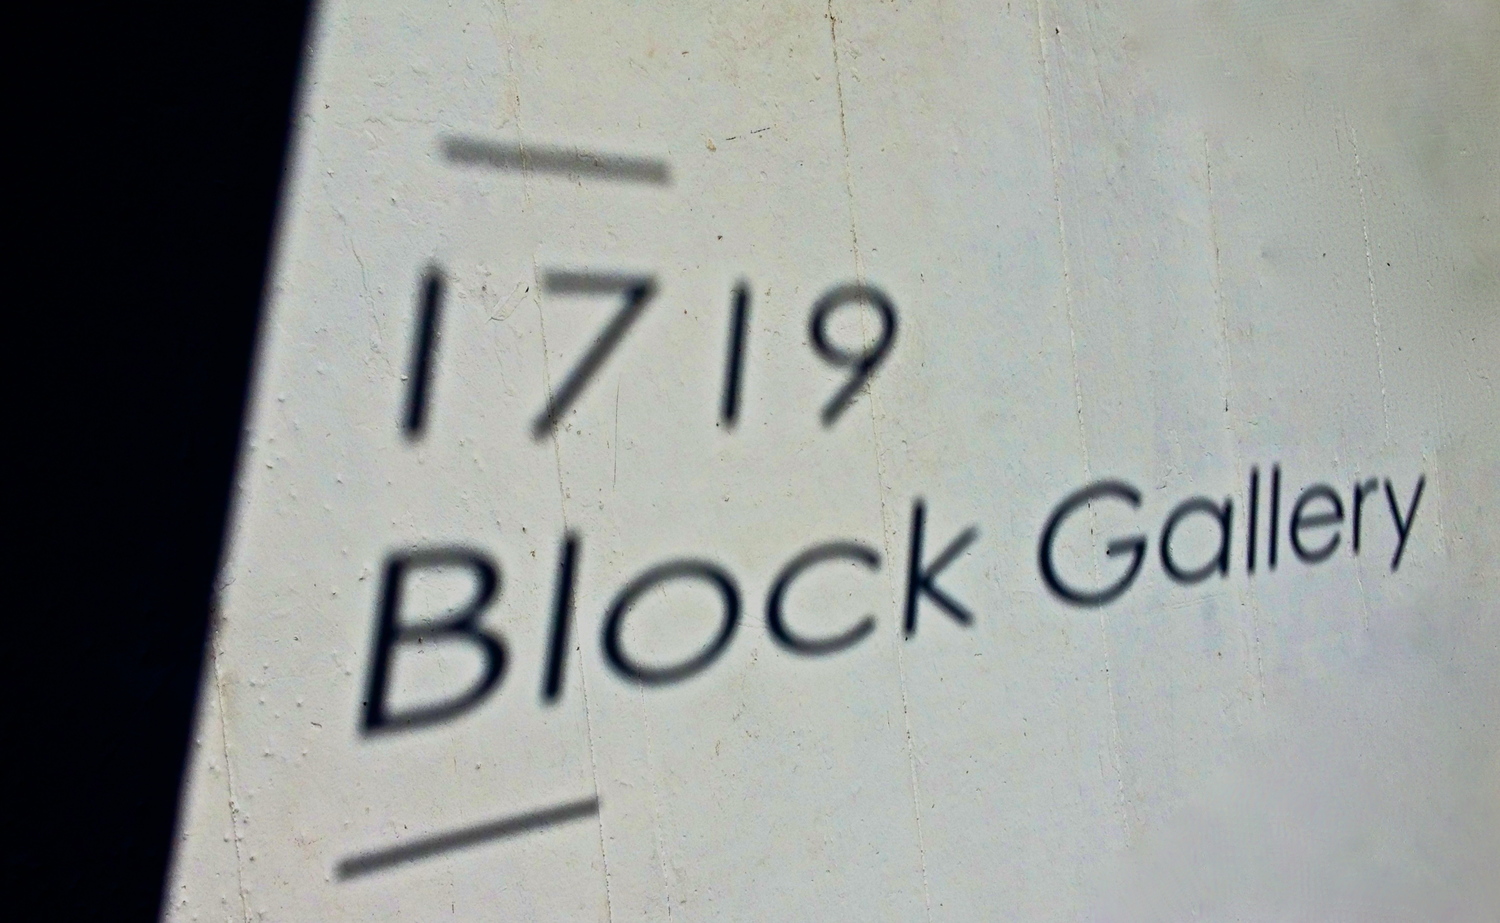 1719 Block Gallery